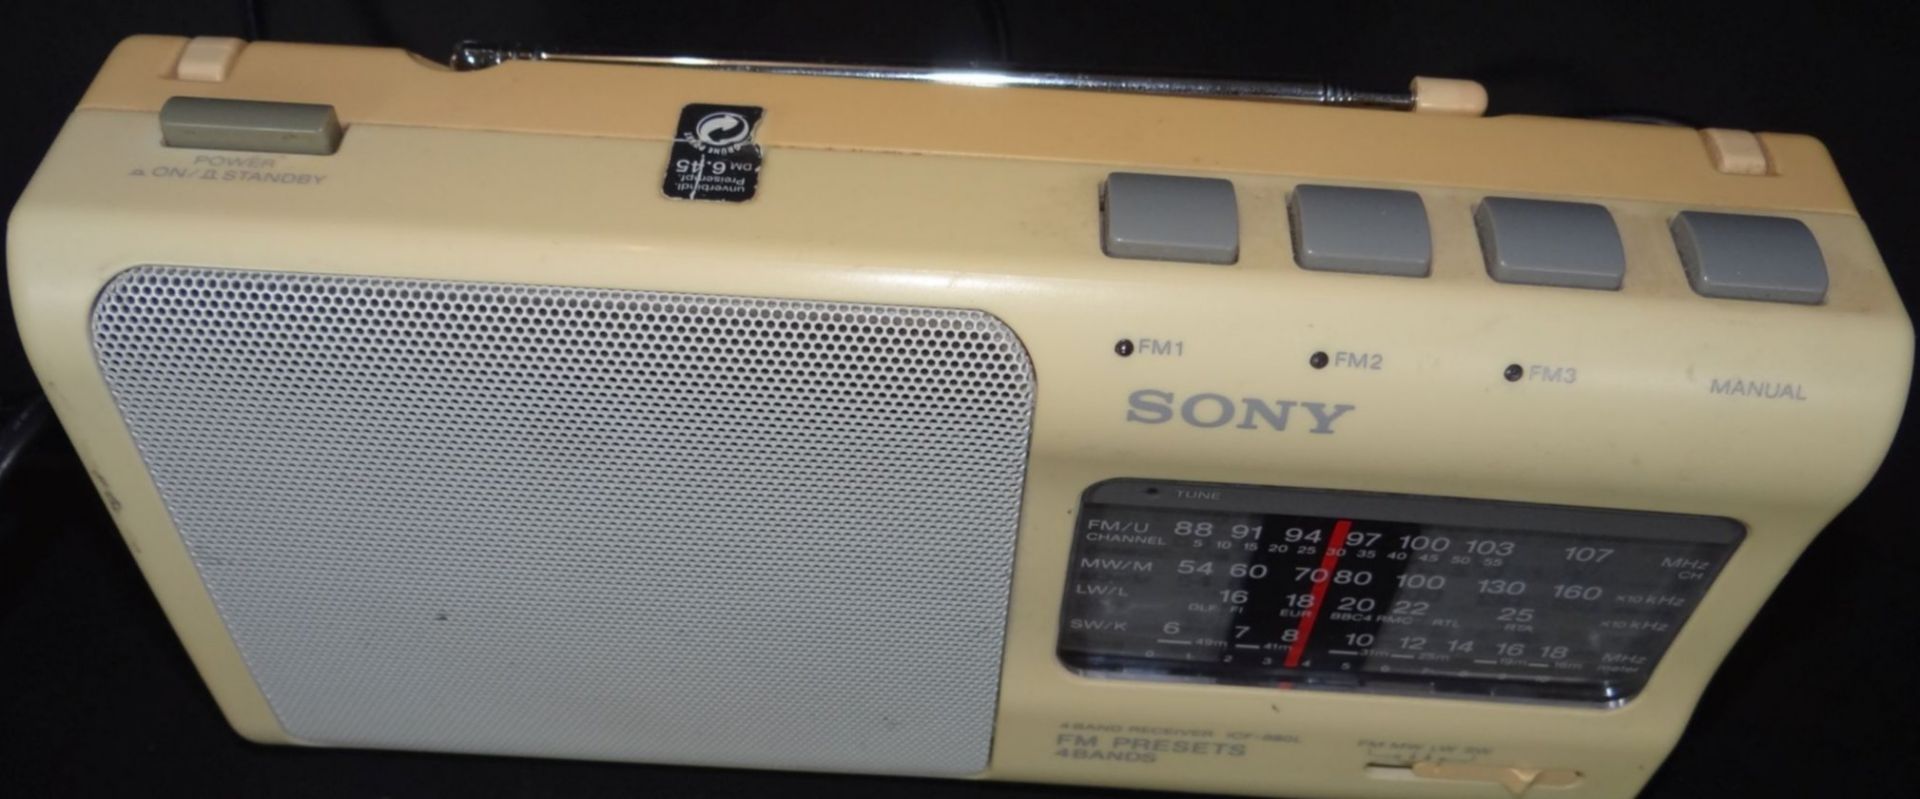 kl. Transistor Radio "Sony" 4-Band , funktionstüchtig, H-12 cm, 25x5 c - Bild 2 aus 6